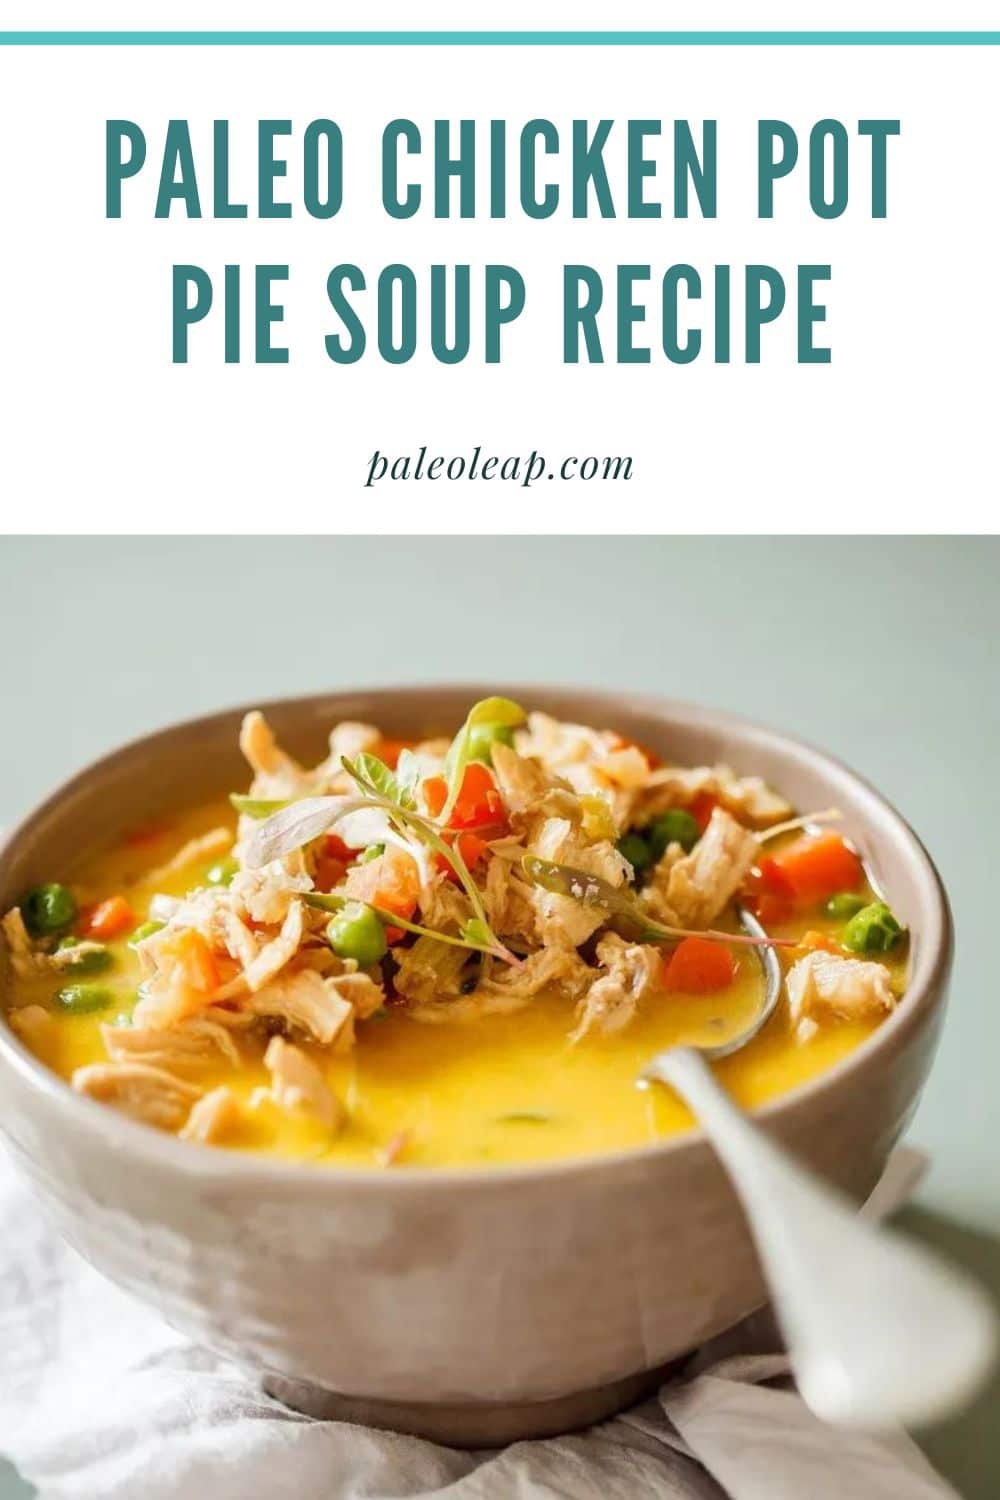 Paleo Chicken Pot Pie Soup Recipe | Paleo Leap